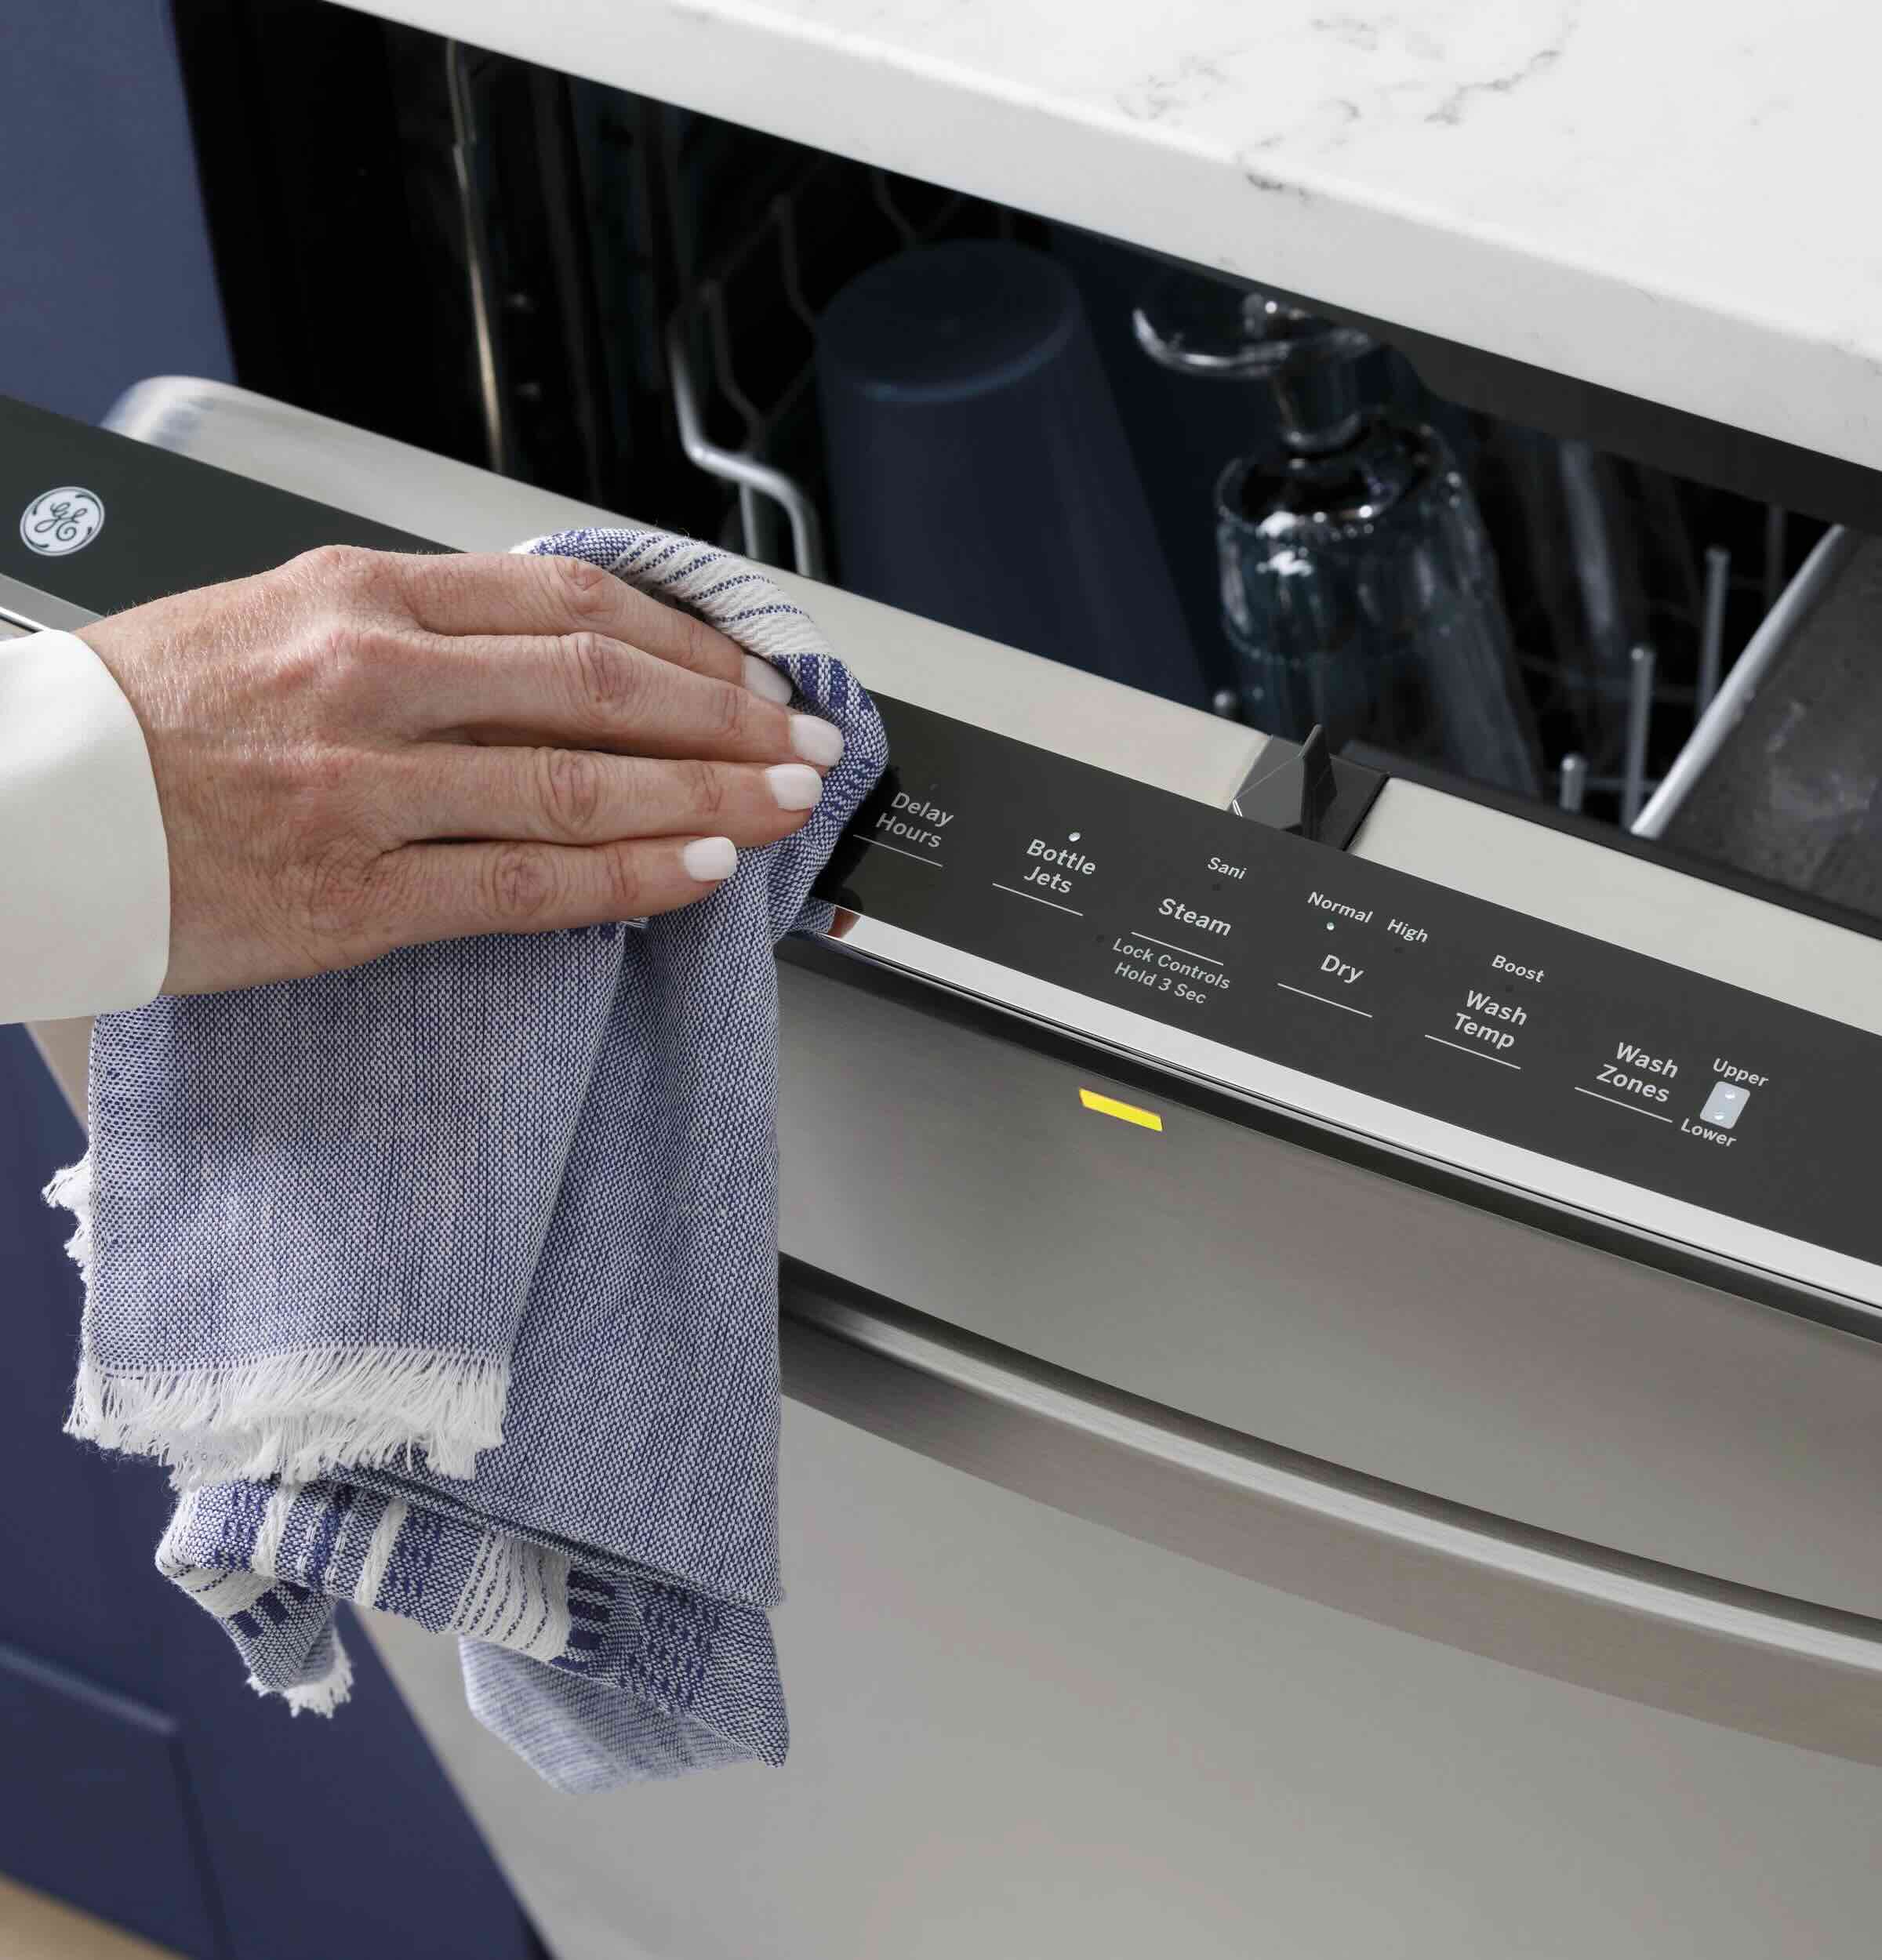 How To Fix The Error Code U2 For GE Dishwasher